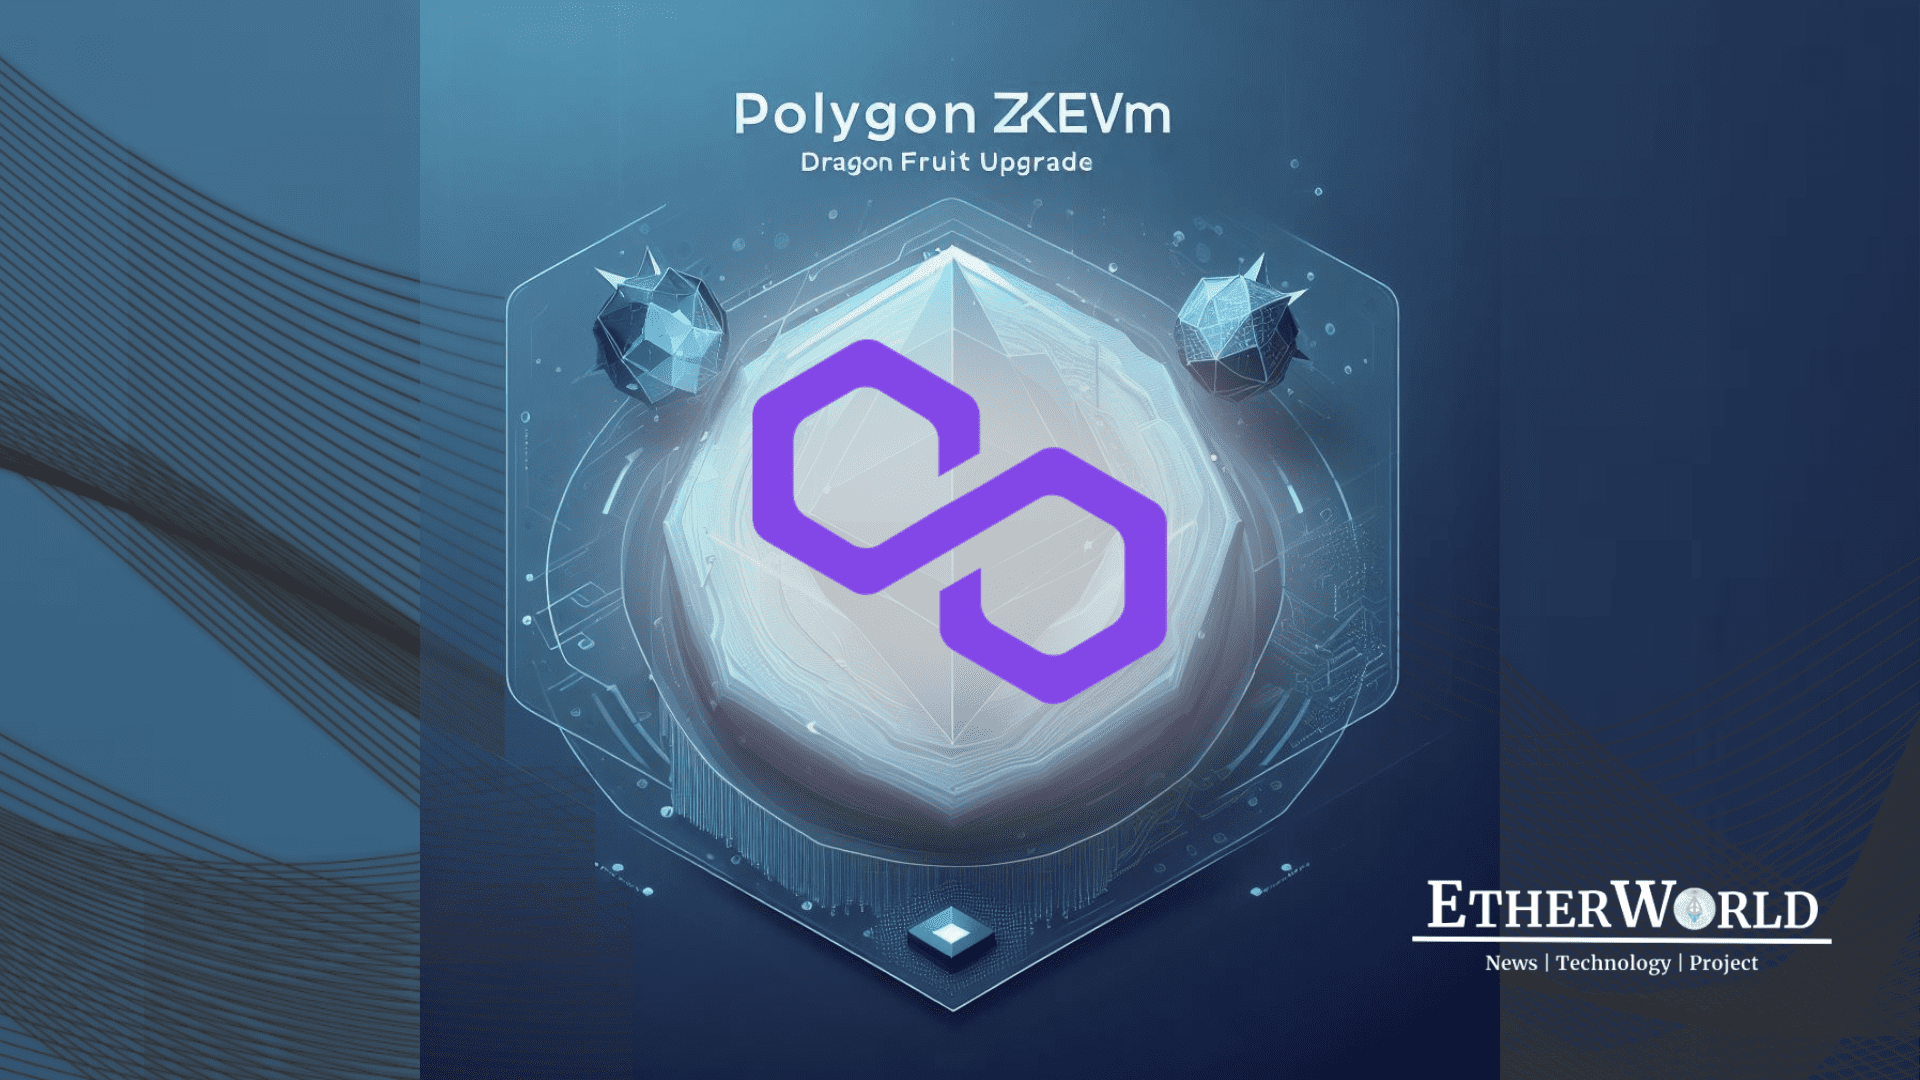 Polygon zkEVM Achieves Milestone with Dragon Fruit Upgrade